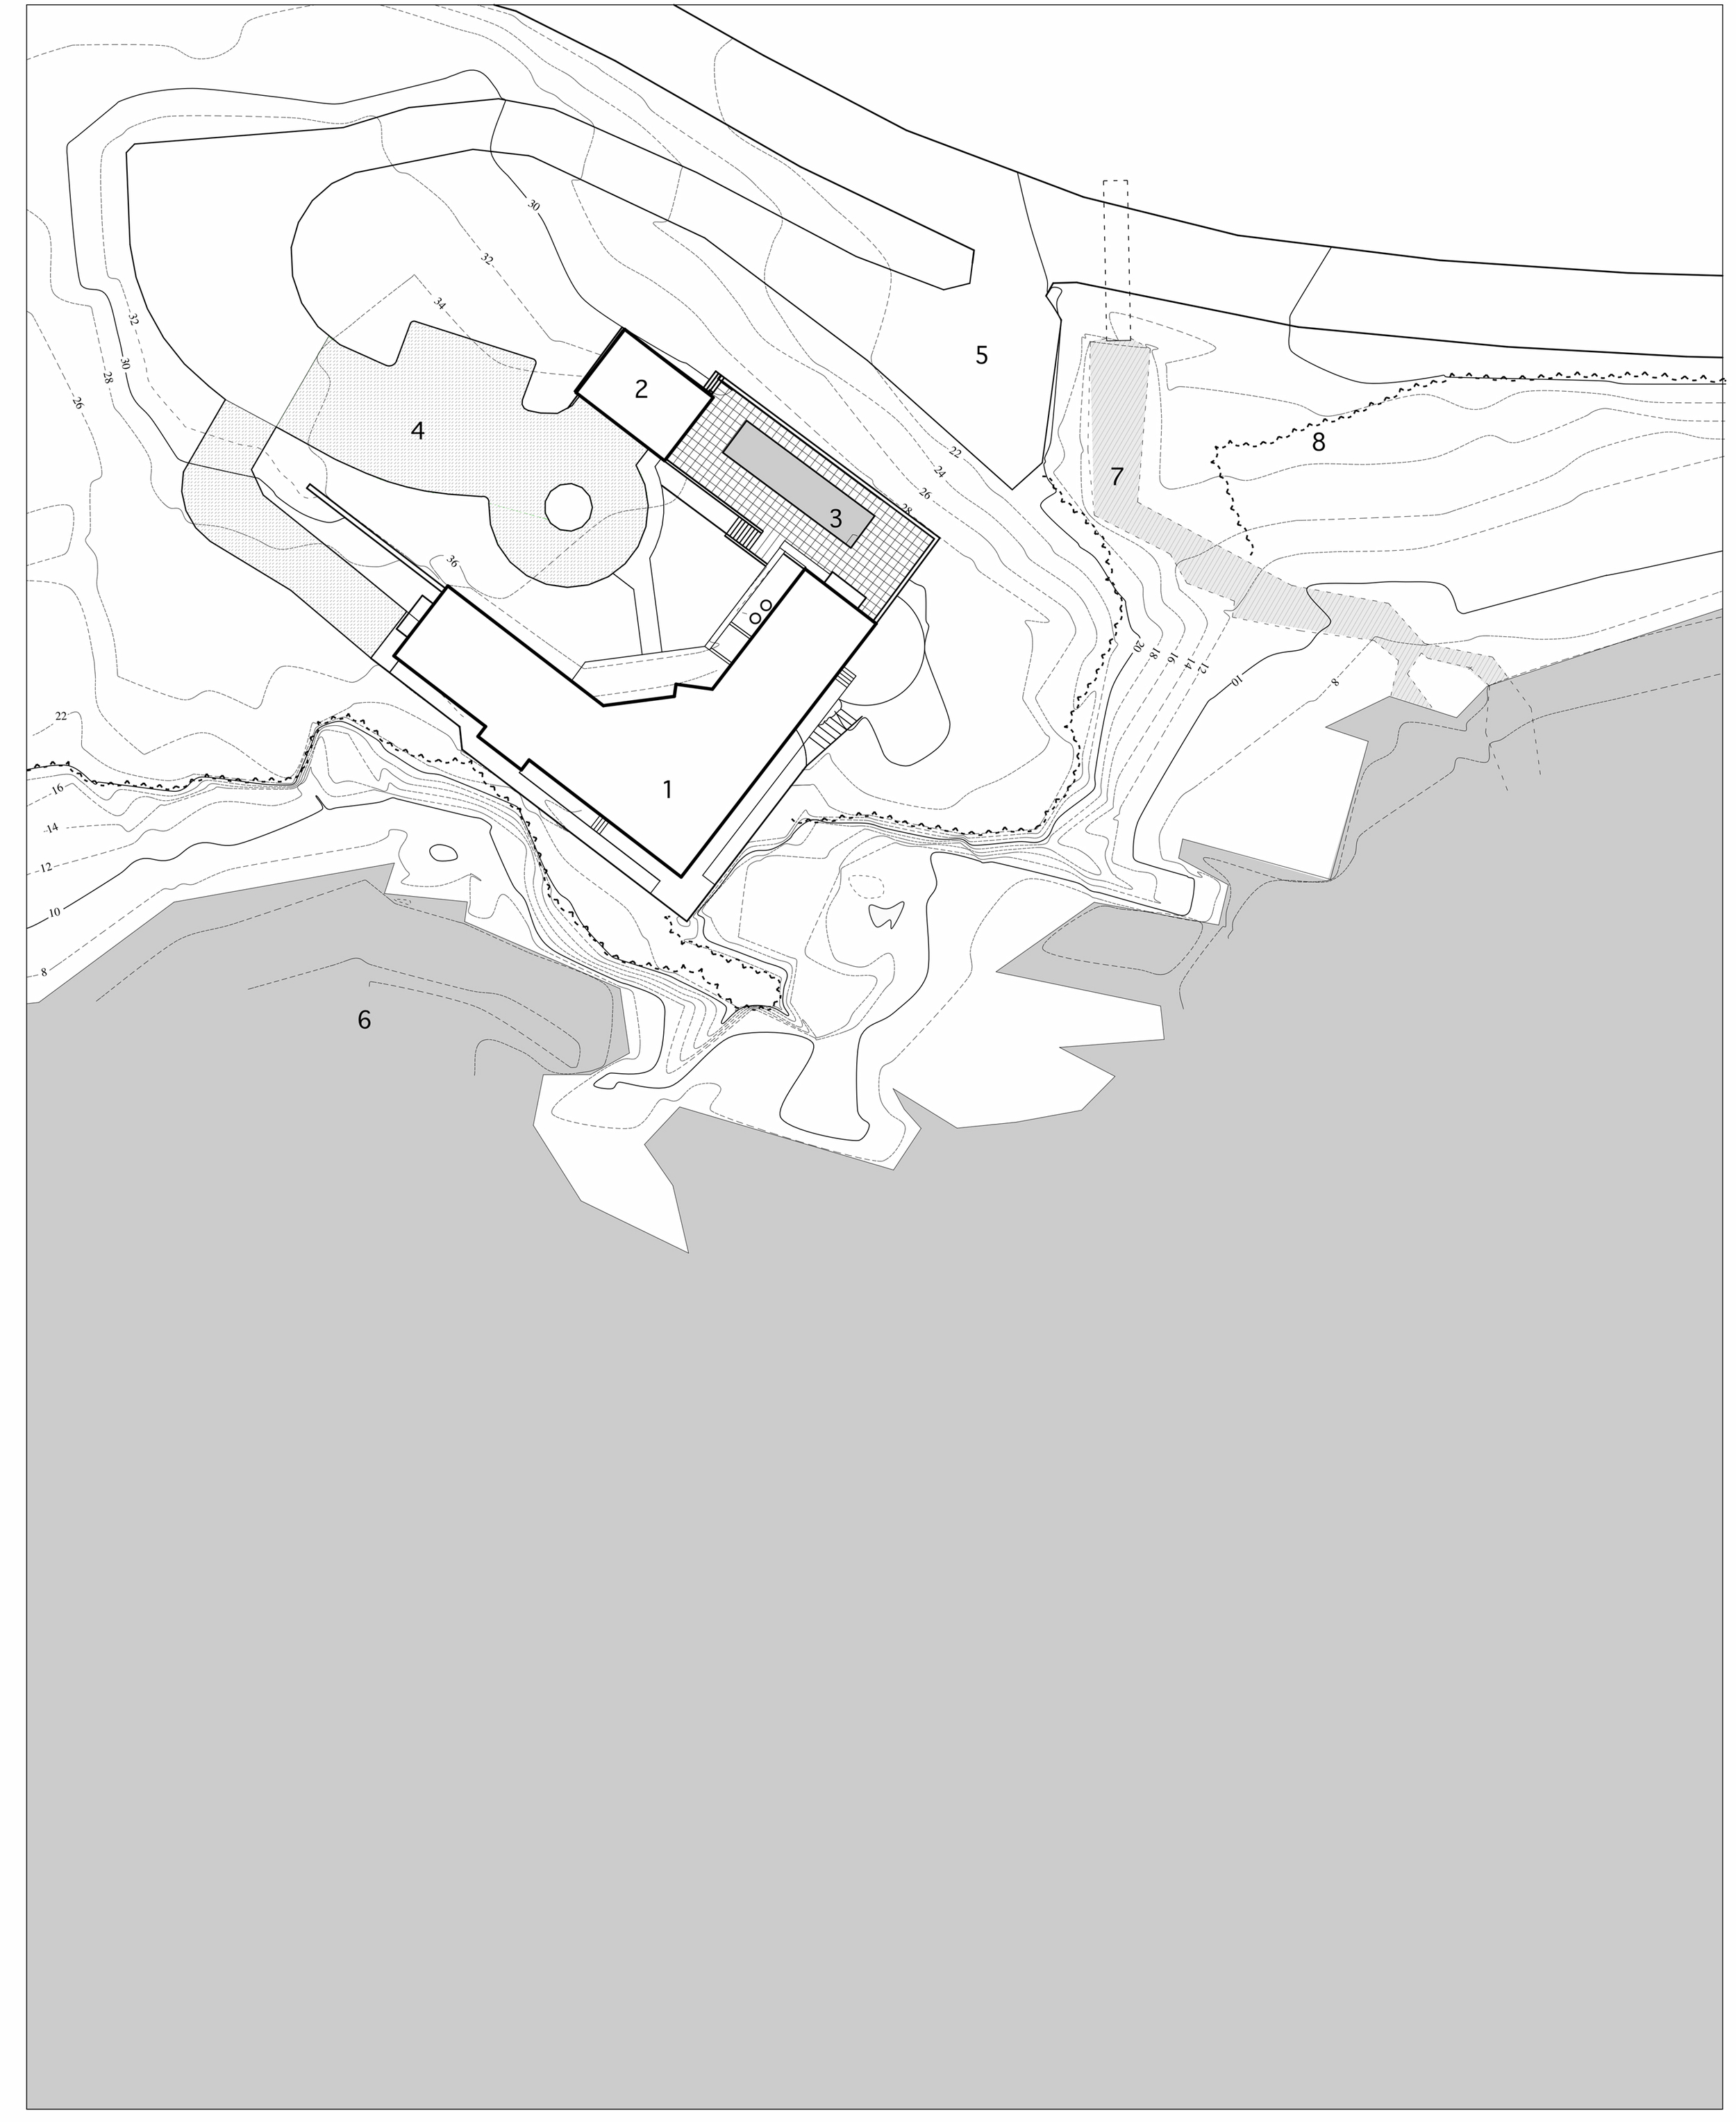  site plan:&nbsp; (1) house, (2) garage, (3) swimming pool, (4) entry drive, (5) driveway, (6) coastline, (7) stream, (8) edge of site 